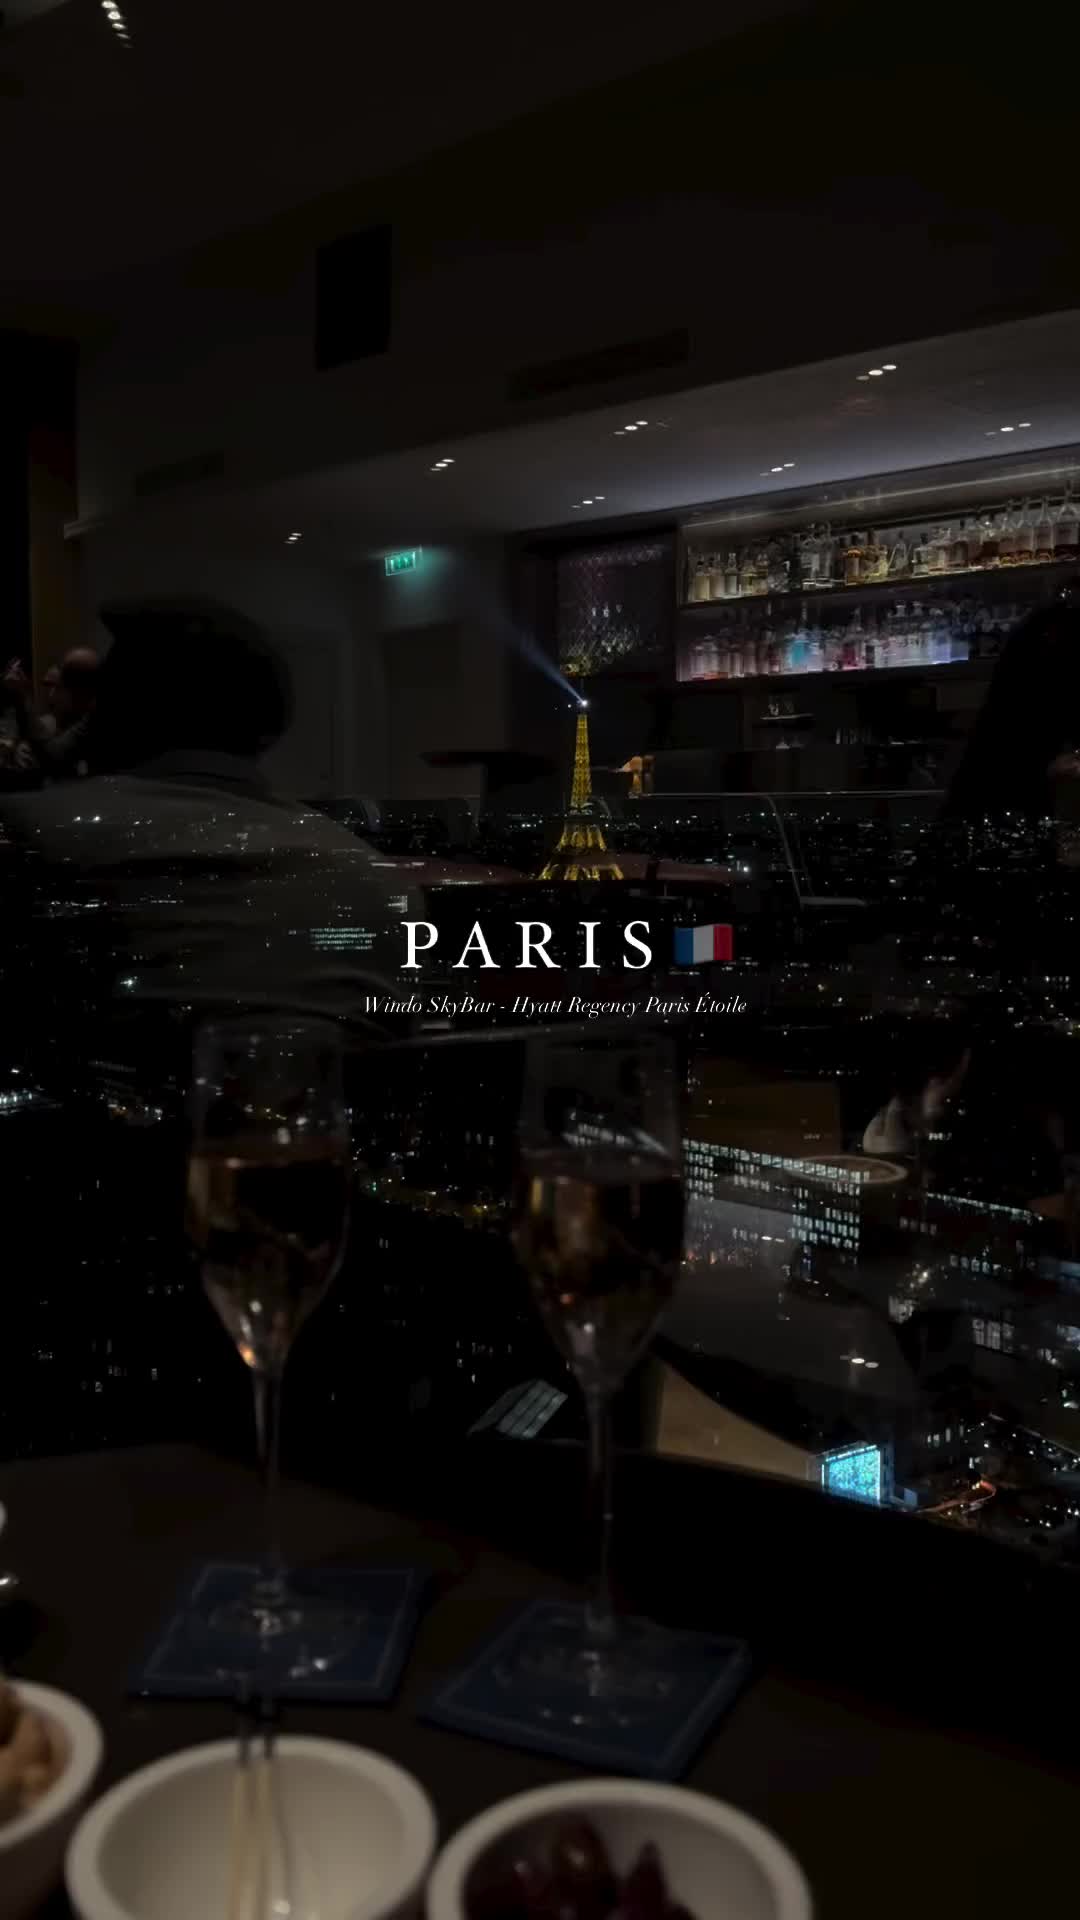 Highest Bar in Paris with Eiffel Tower Views